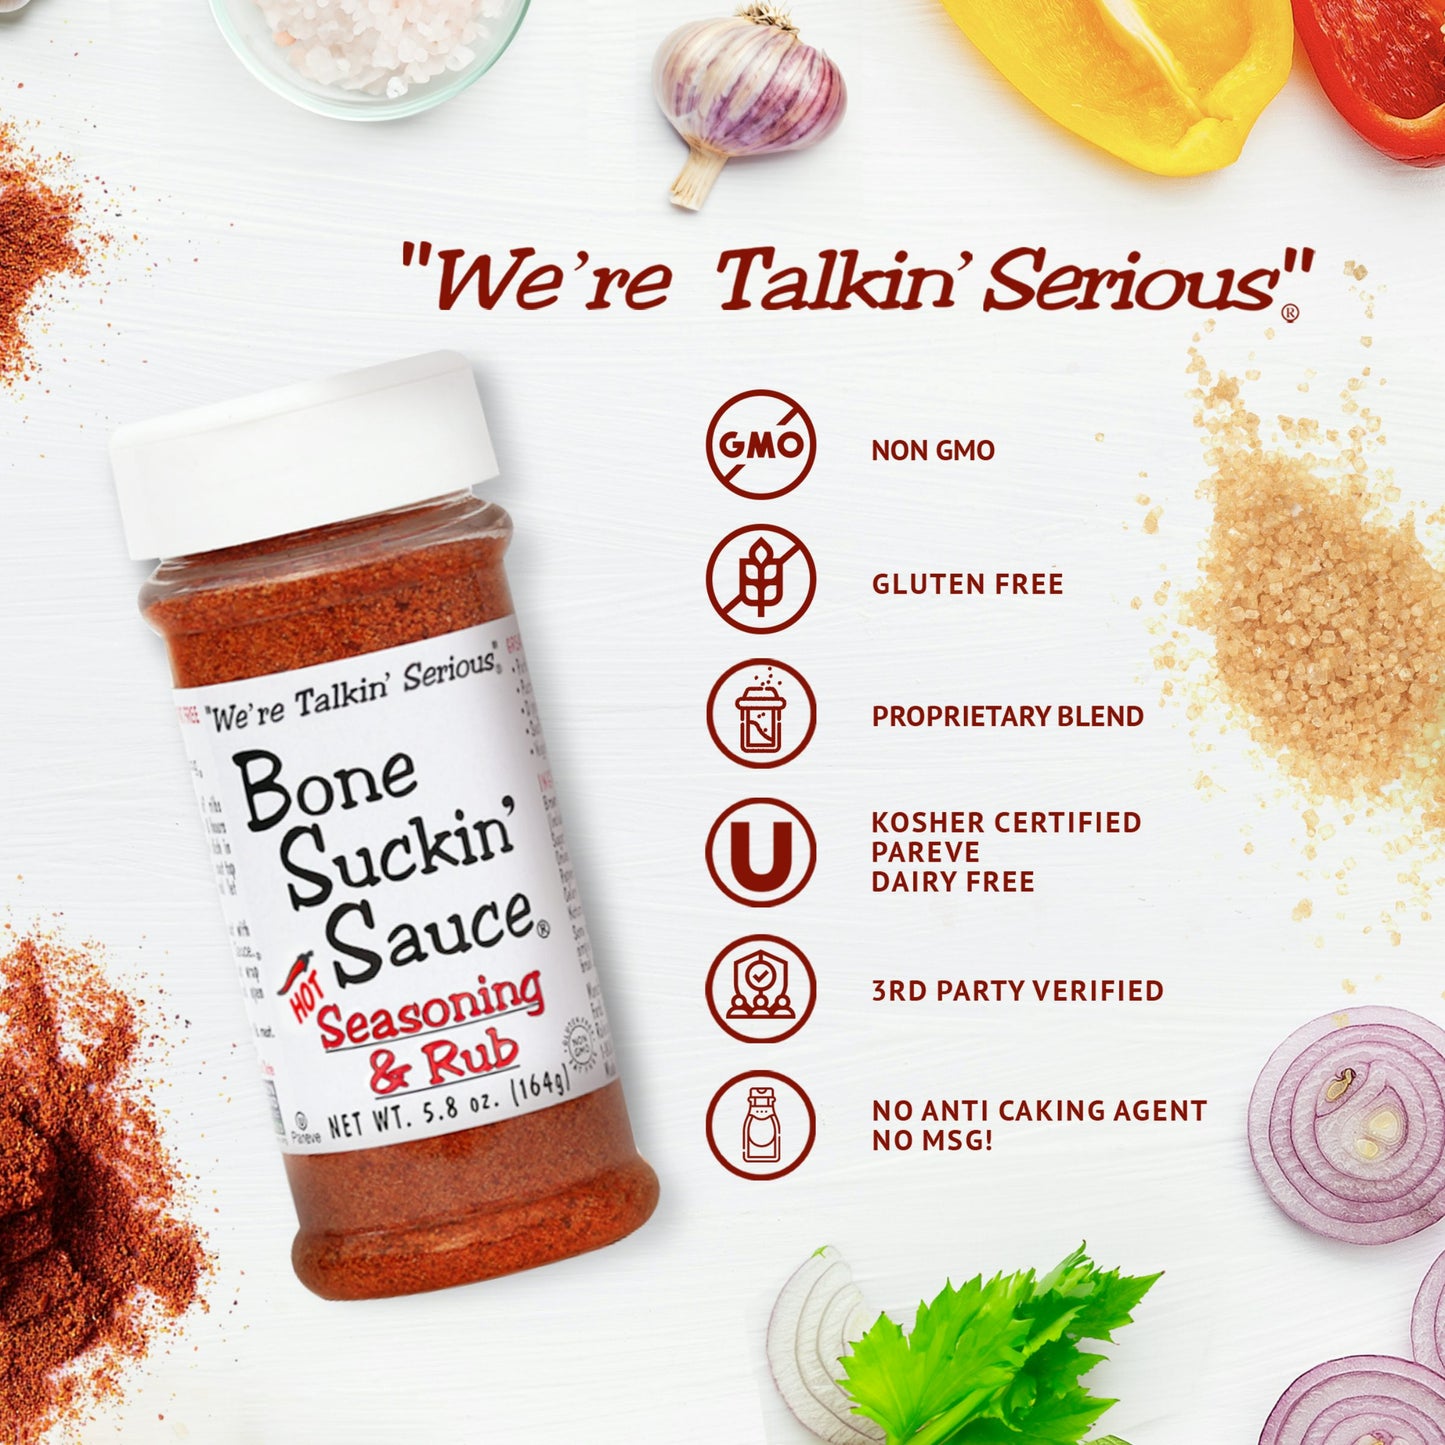 Bone Suckin Sauce Hot Seasoning & Rub, 5.8 oz. NON GMO, GLUTEN FREE, PROPRIETARY BLEND, KOSHER CERTIFIED, PAREVE, DAIRY FREE, THIRD PARTY VERIFIED, NO ANTI CAKING AGENT, NO MSG.